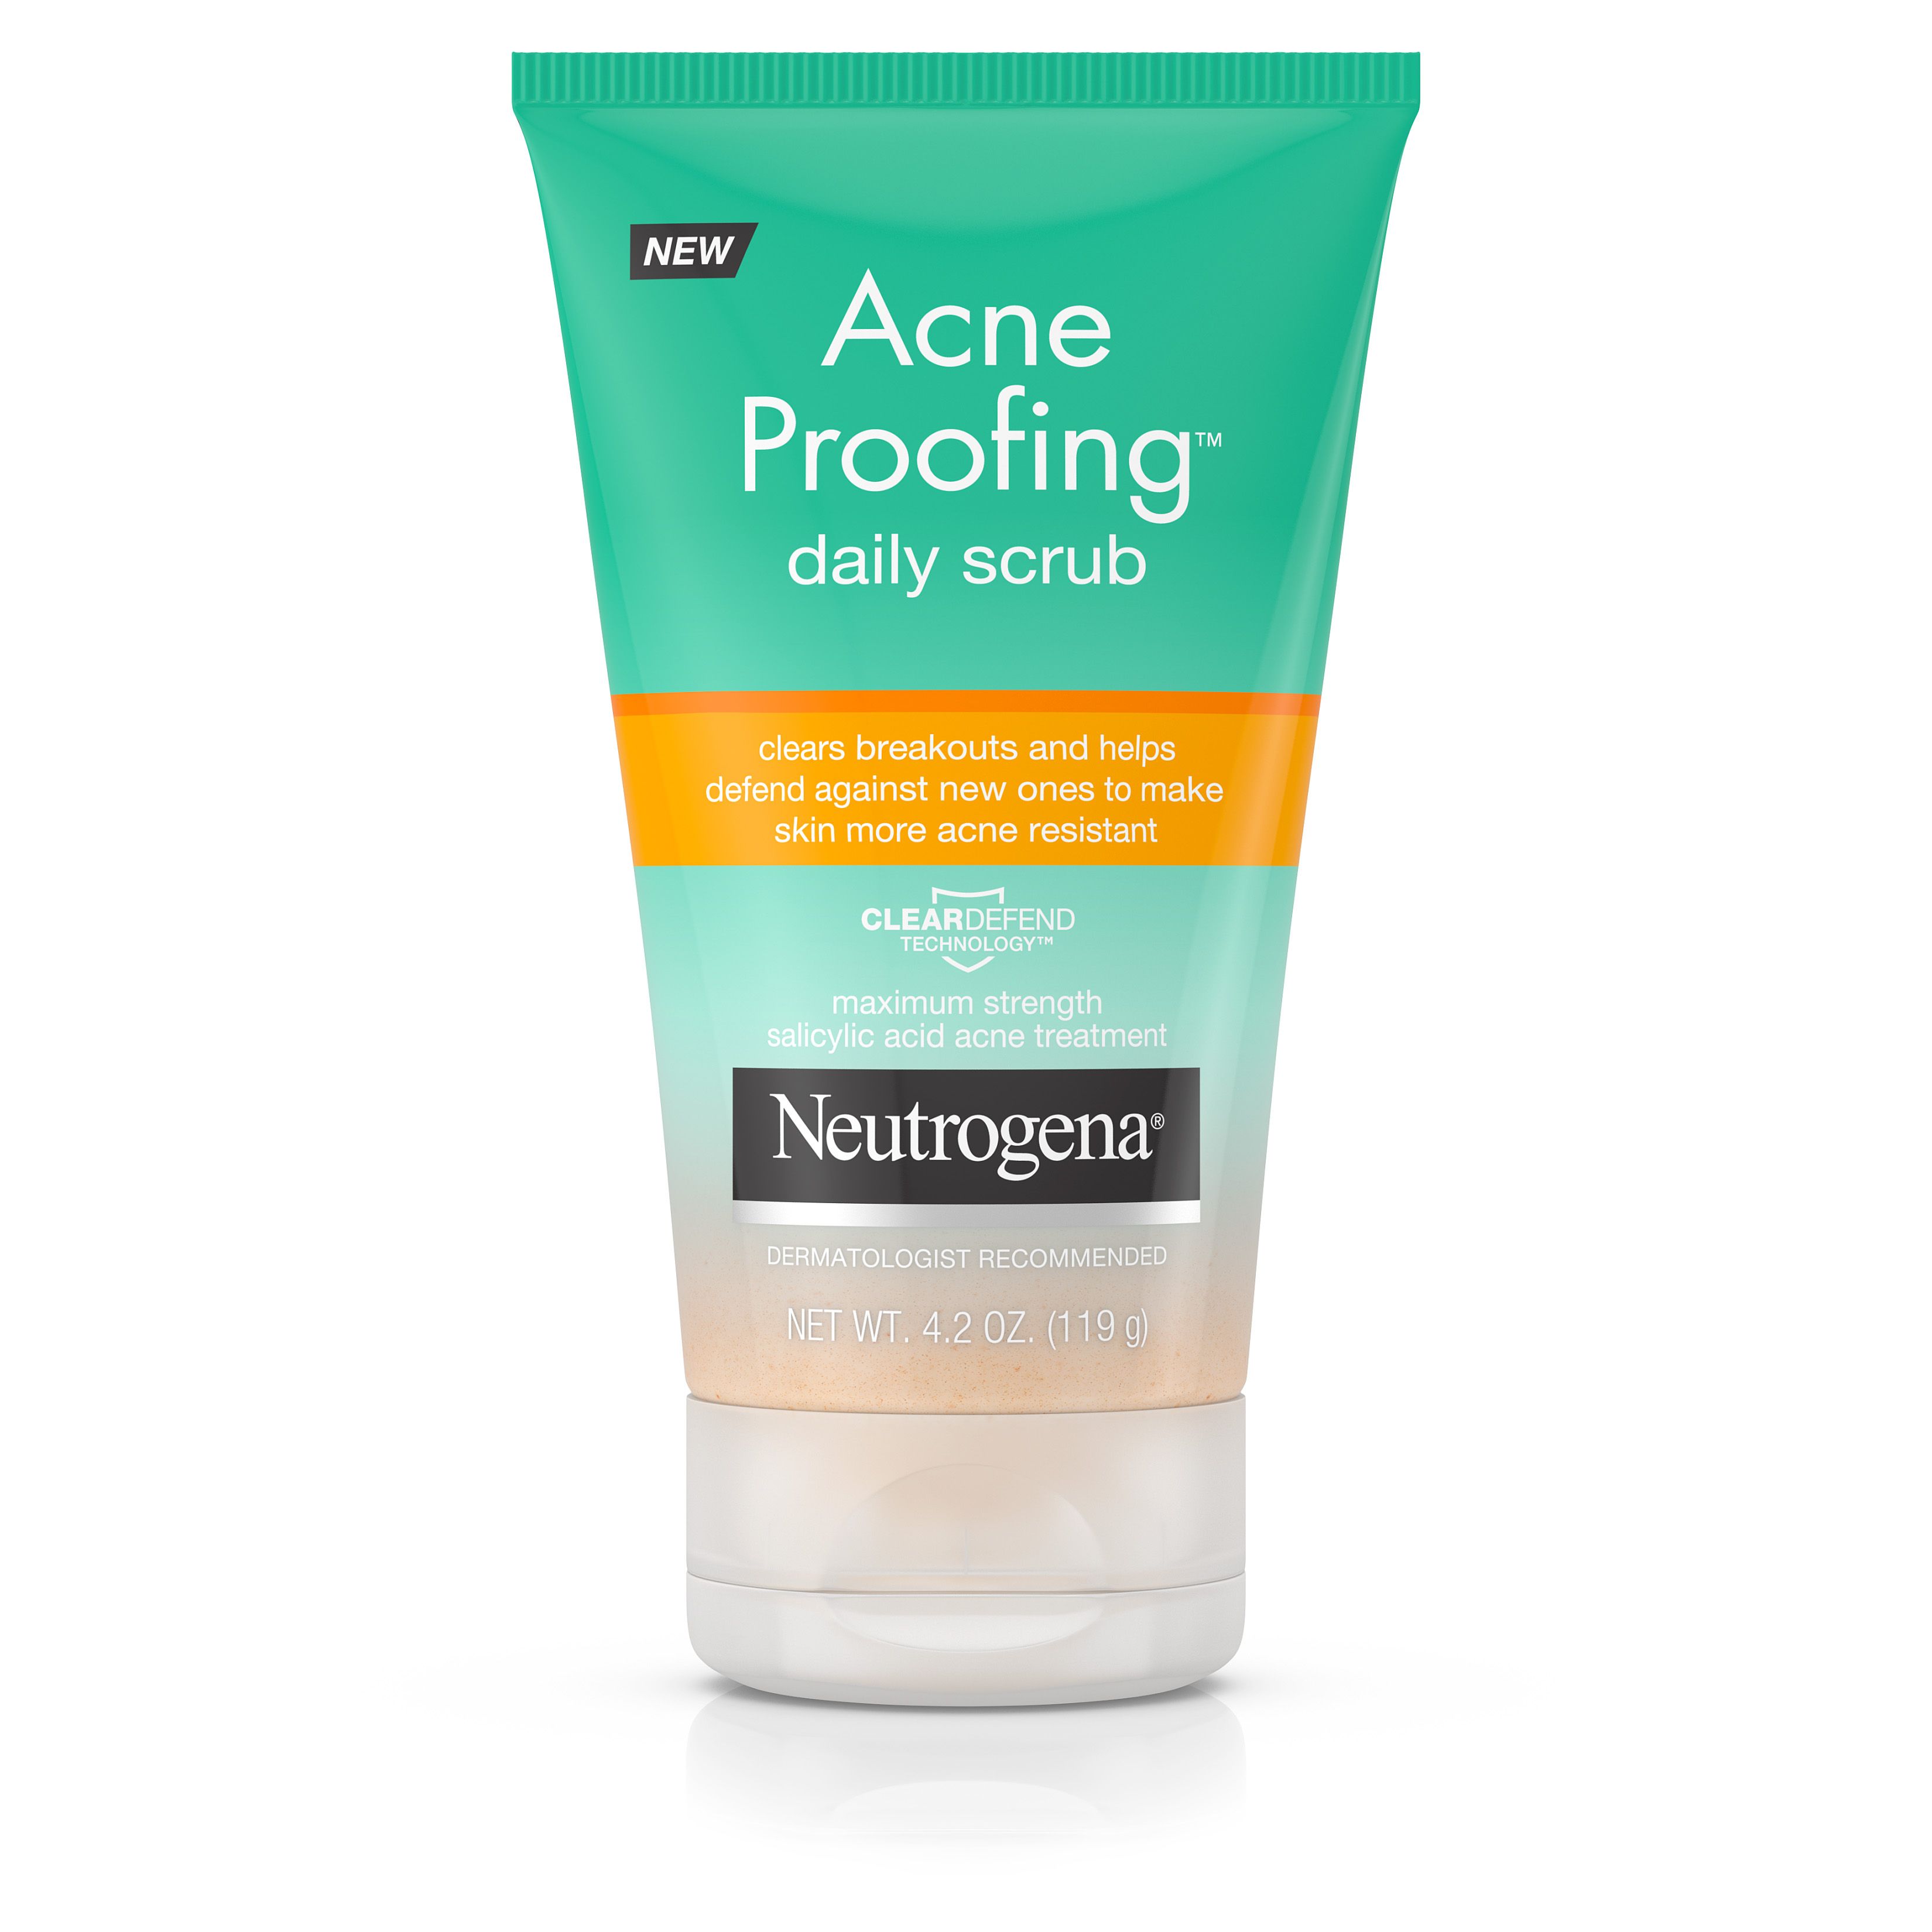 Acne Proofing™ Daily Scrub | Neutrogena